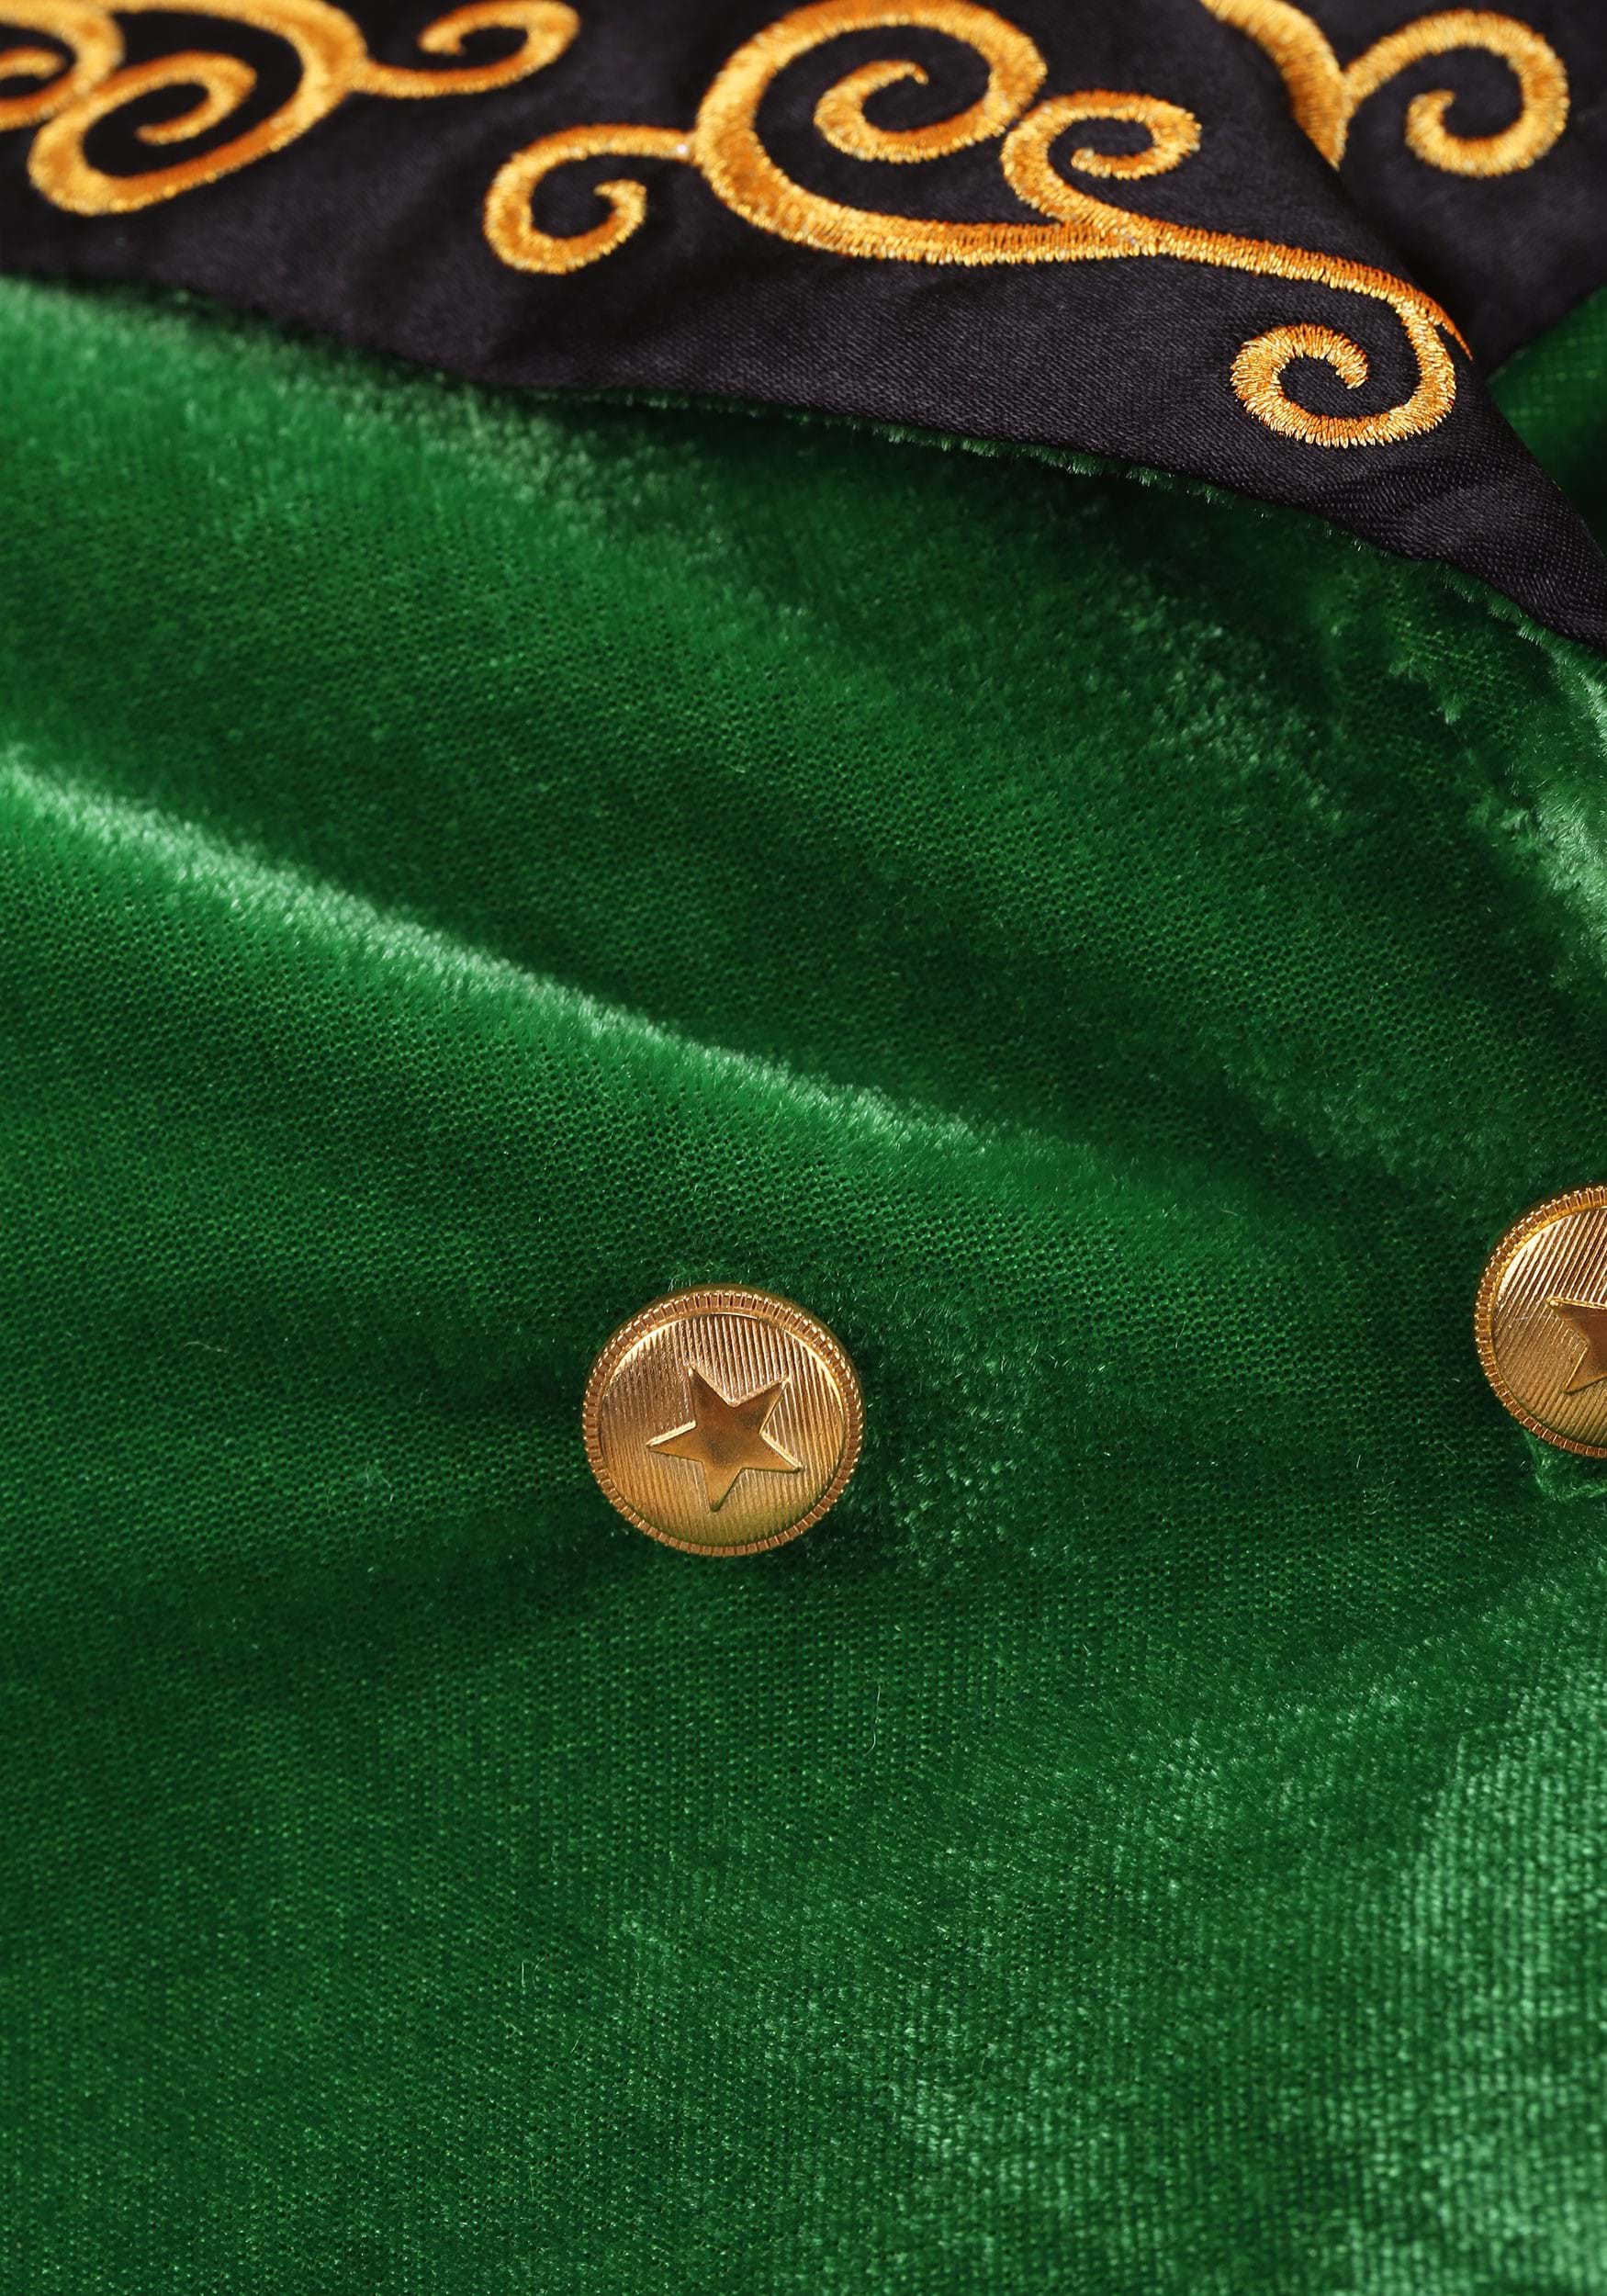 Lavish Leprechaun Fancy Dress Costume For Women , St. Patrick's Day Fancy Dress Costumes